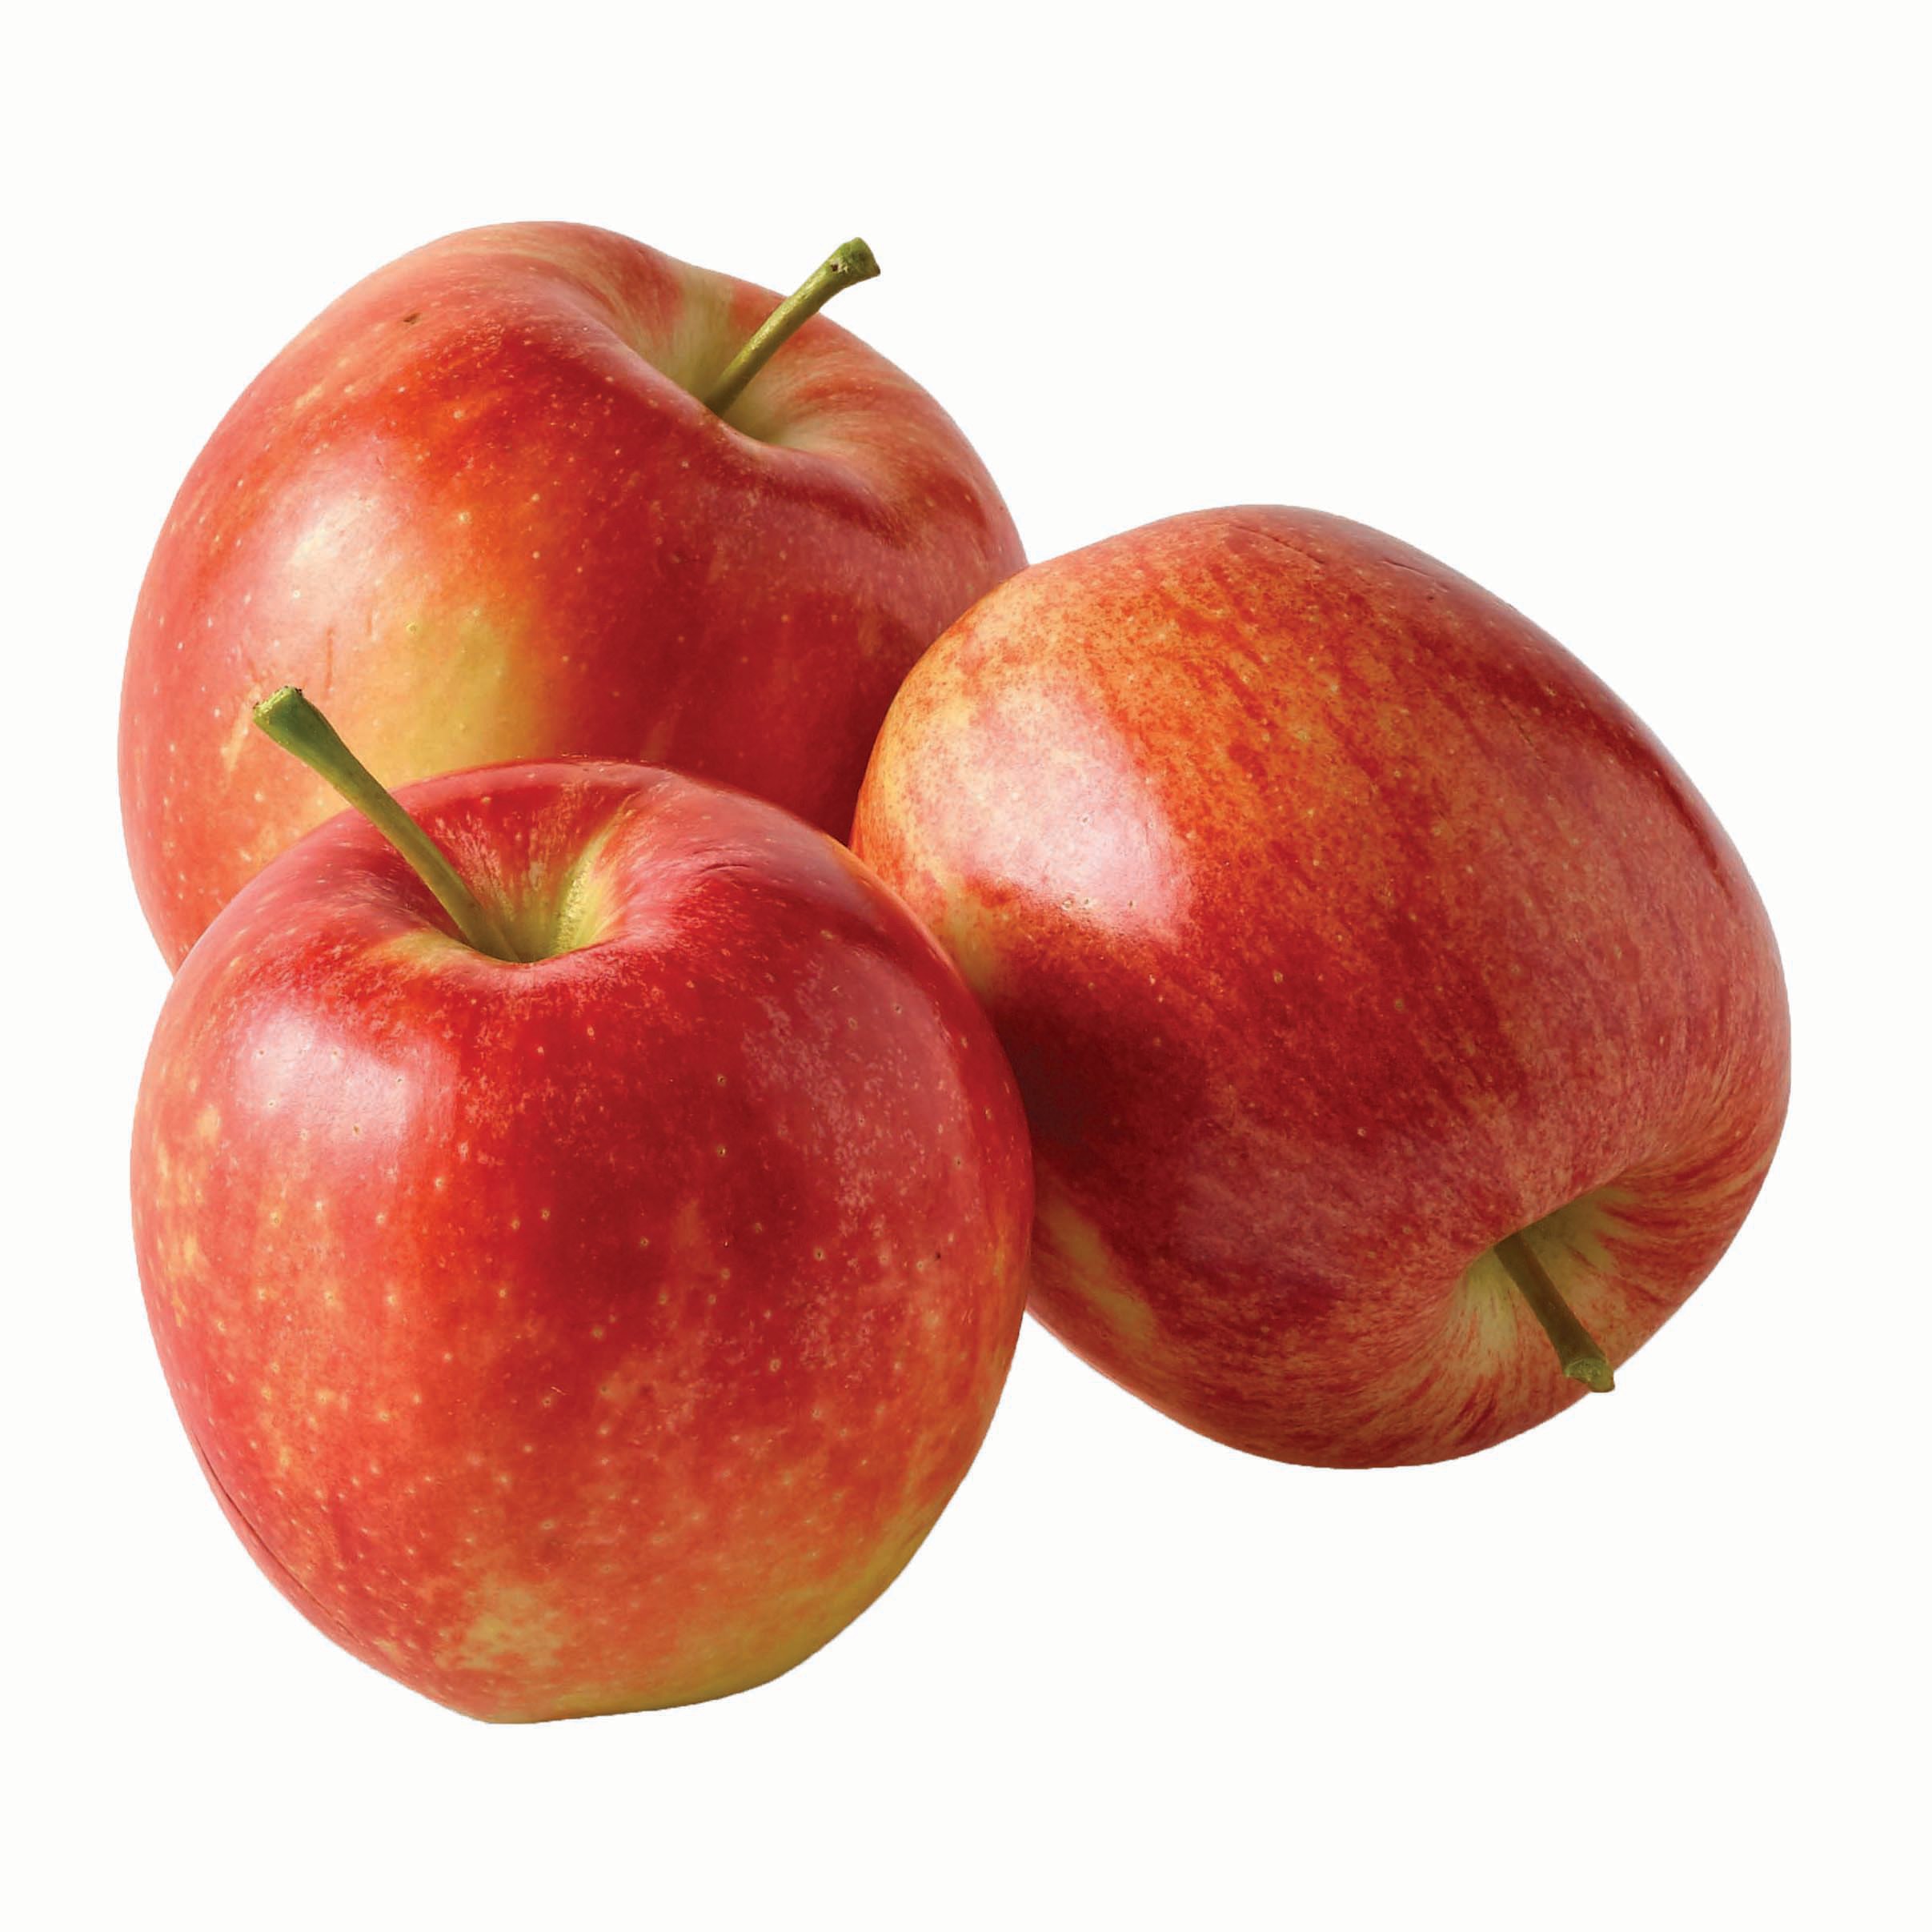 Organic Gala Apples ‑ Shop Apples at H‑E‑B